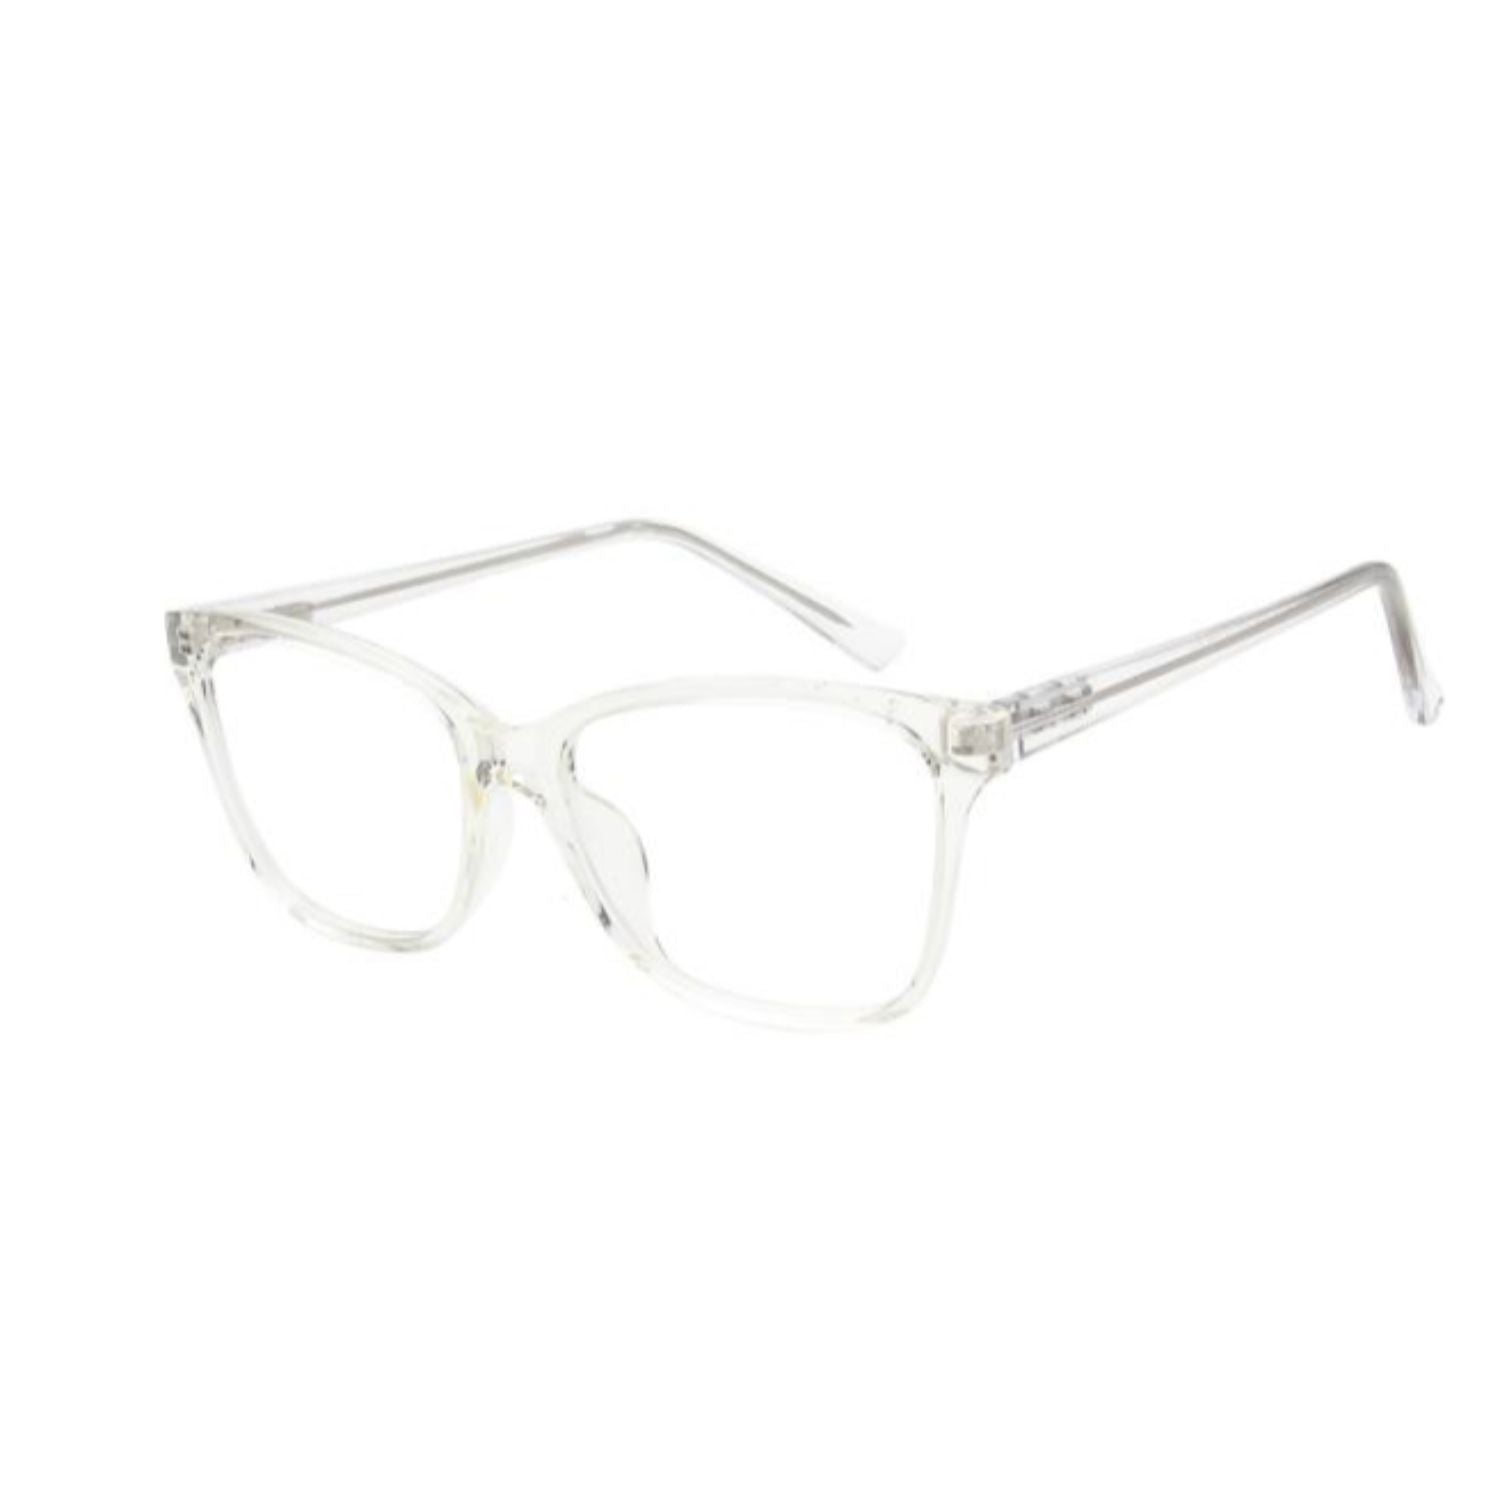 OTR29 - Classic Rectangle High Silhouette Fashion Optical GLASSES